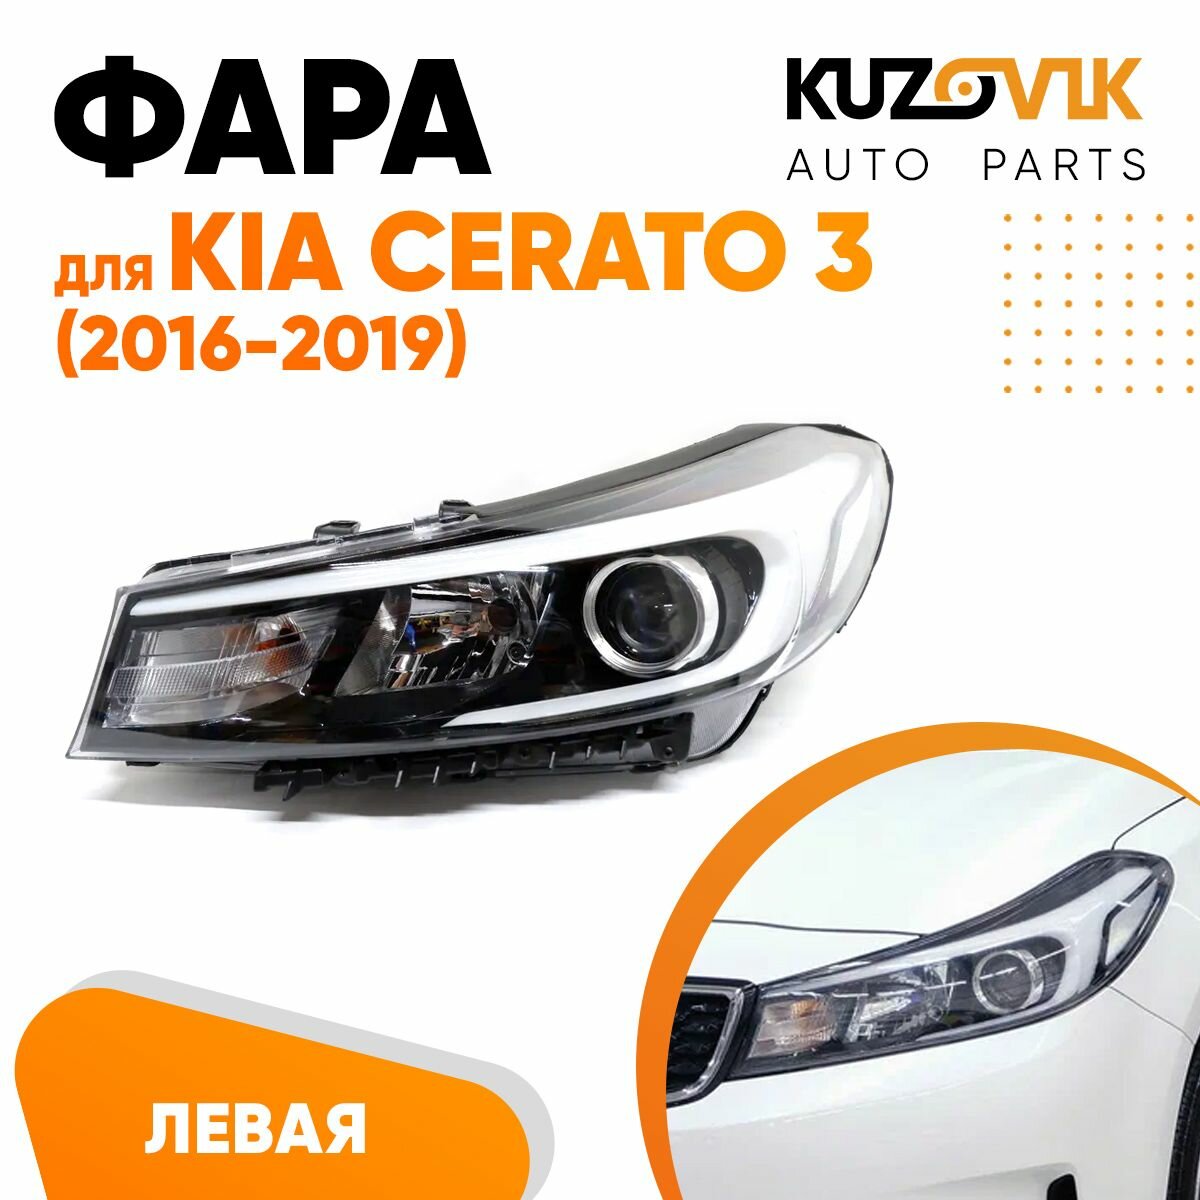 Фара левая для Киа Церато Kia Cerato 3 (2016-2019) рестайлинг